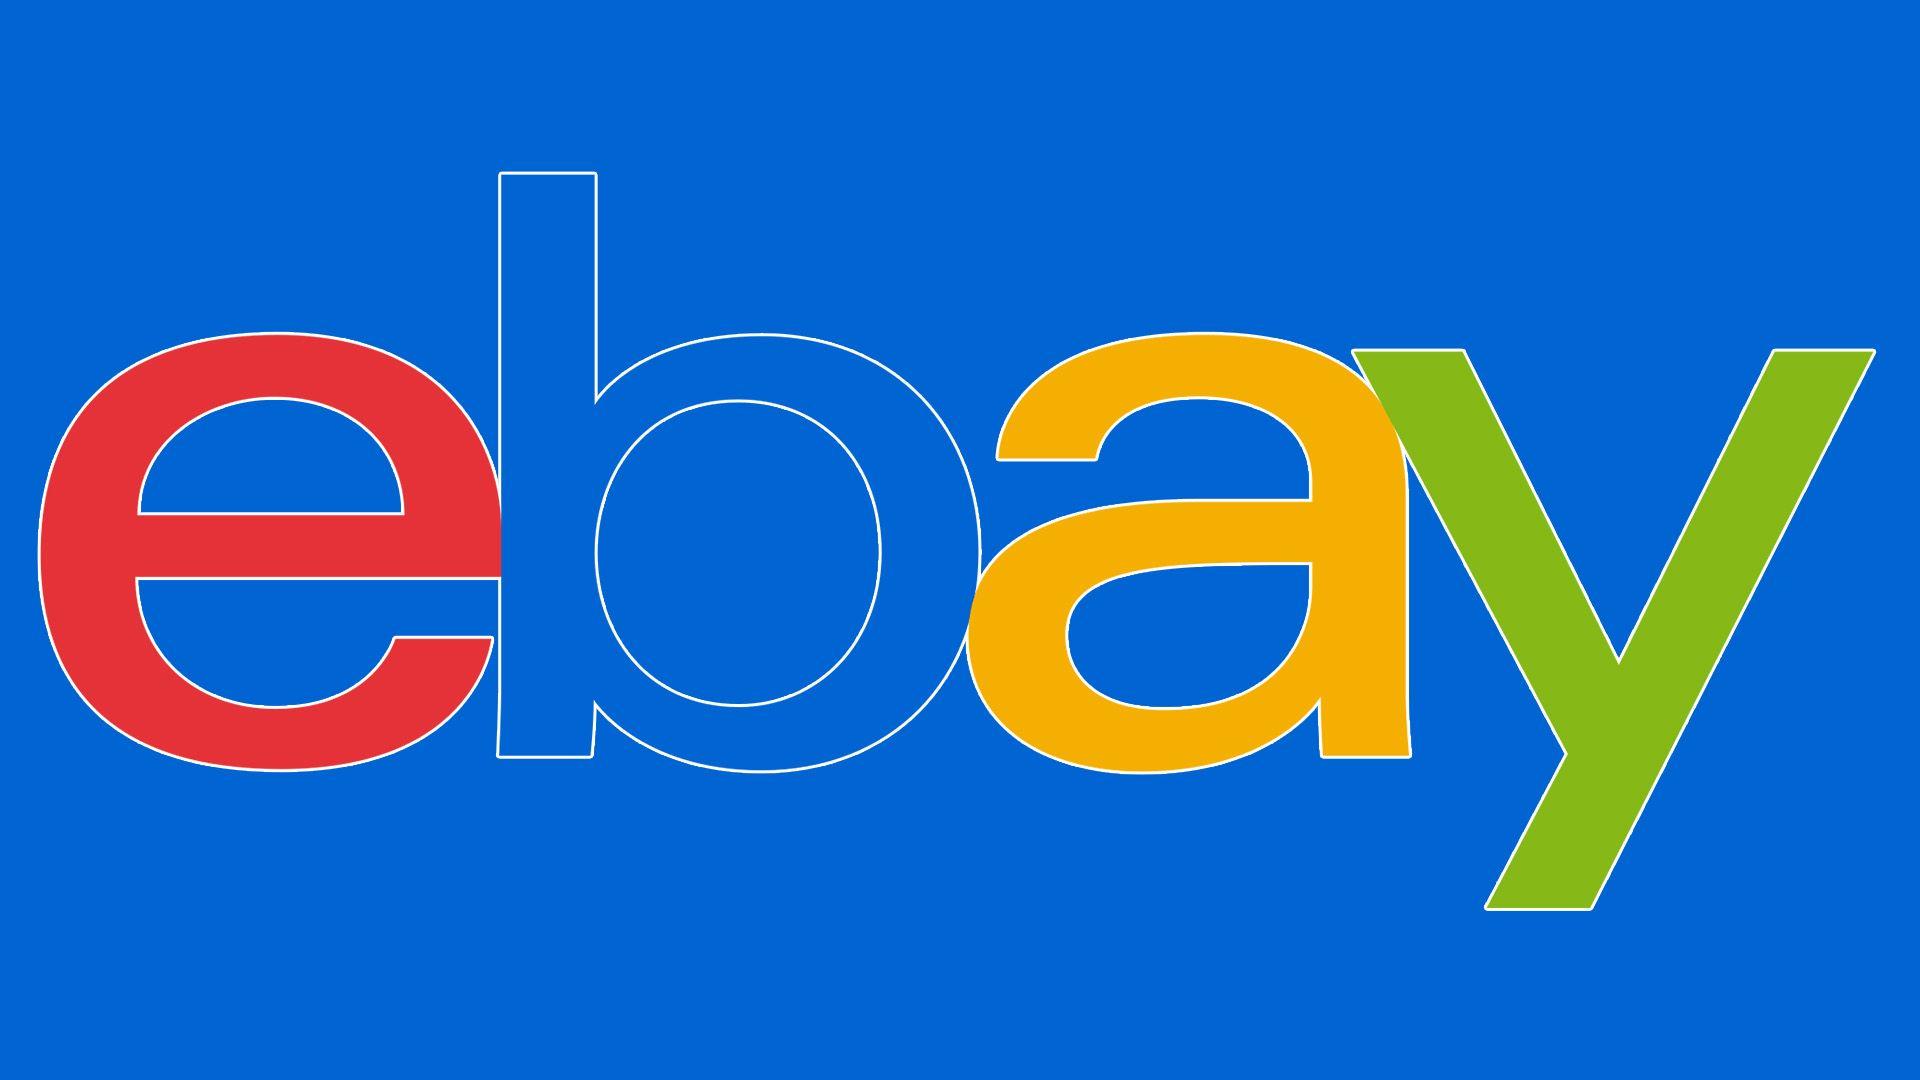 eBay First Logo - eBay logo, symbol, meaning, History and Evolution